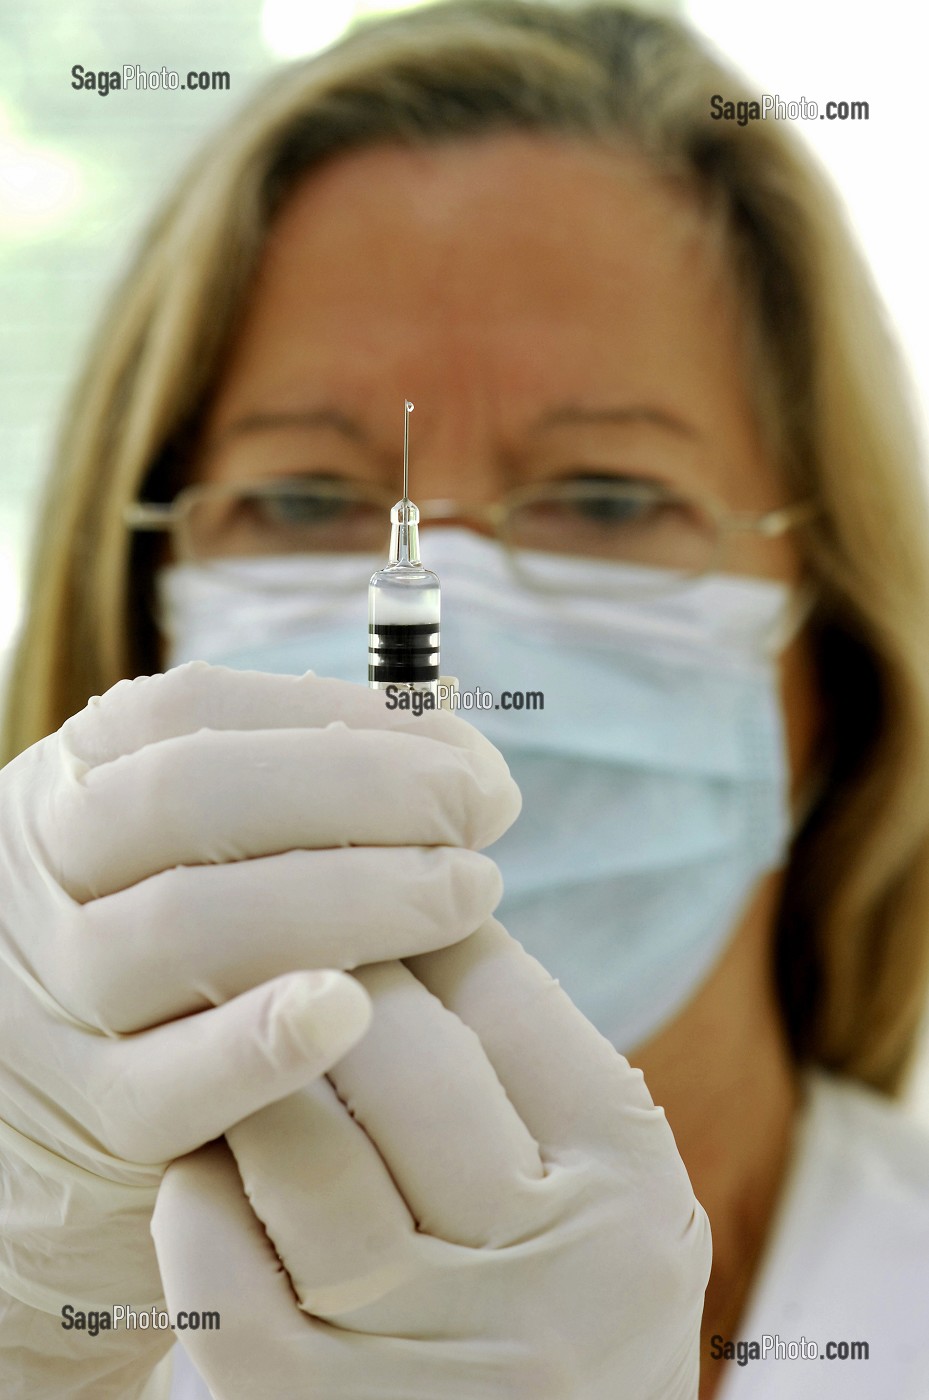 MEDECIN PREPARANT UN VACCIN, VACCINATION CONTRE LE VIRUS H1N1 OU LA GRIPPE A 